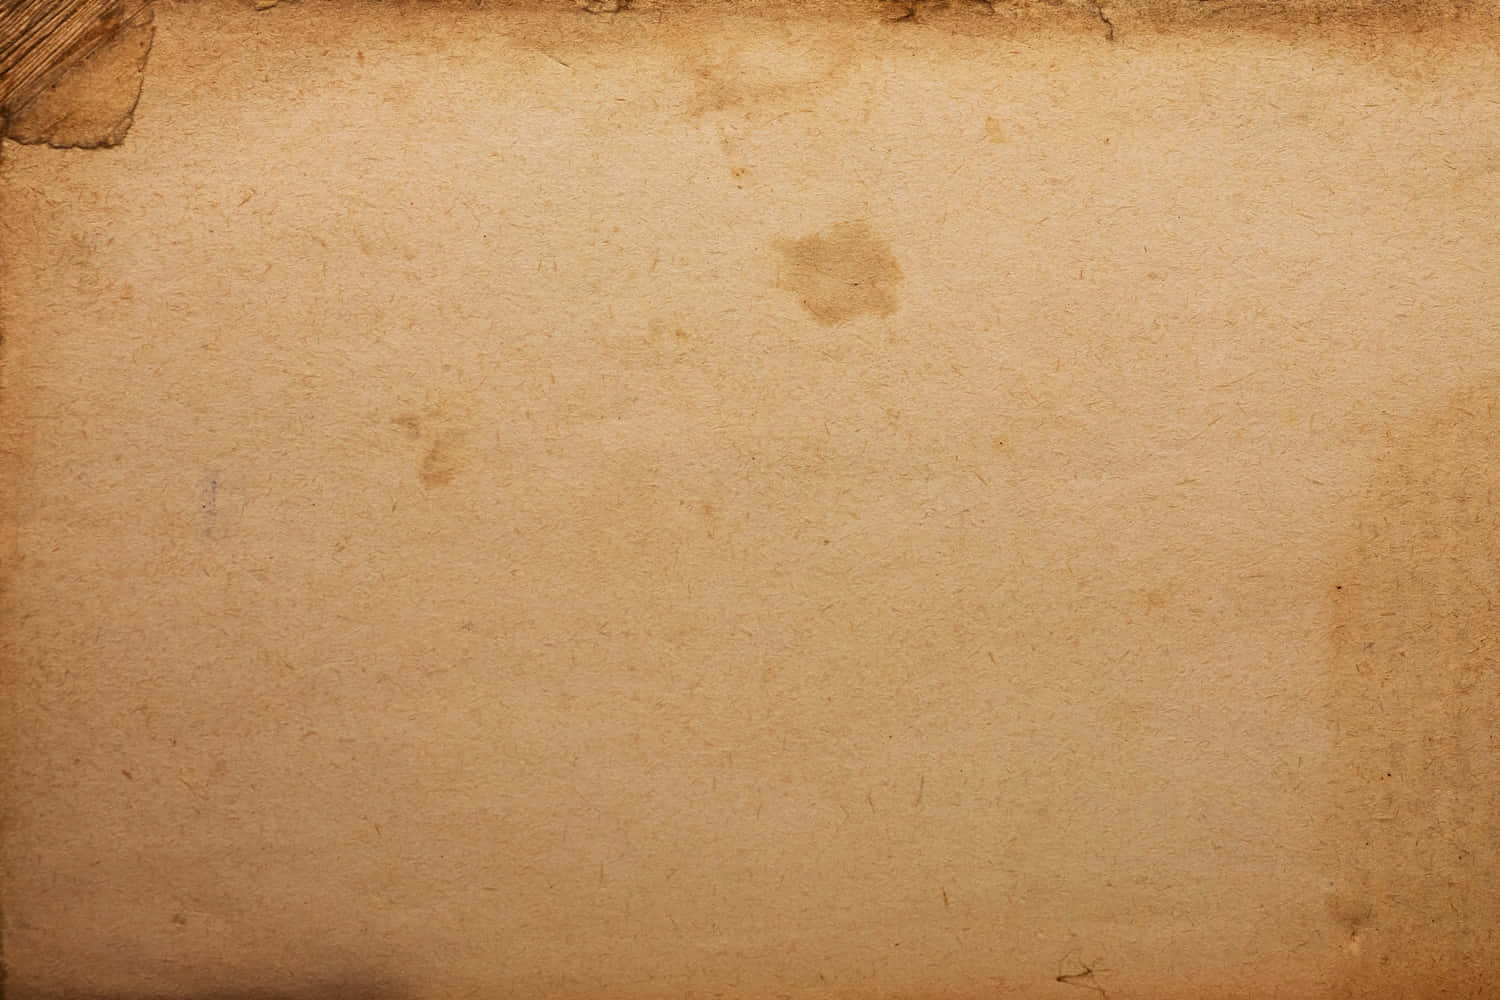 A close up shot of a crumpled sheet of paper